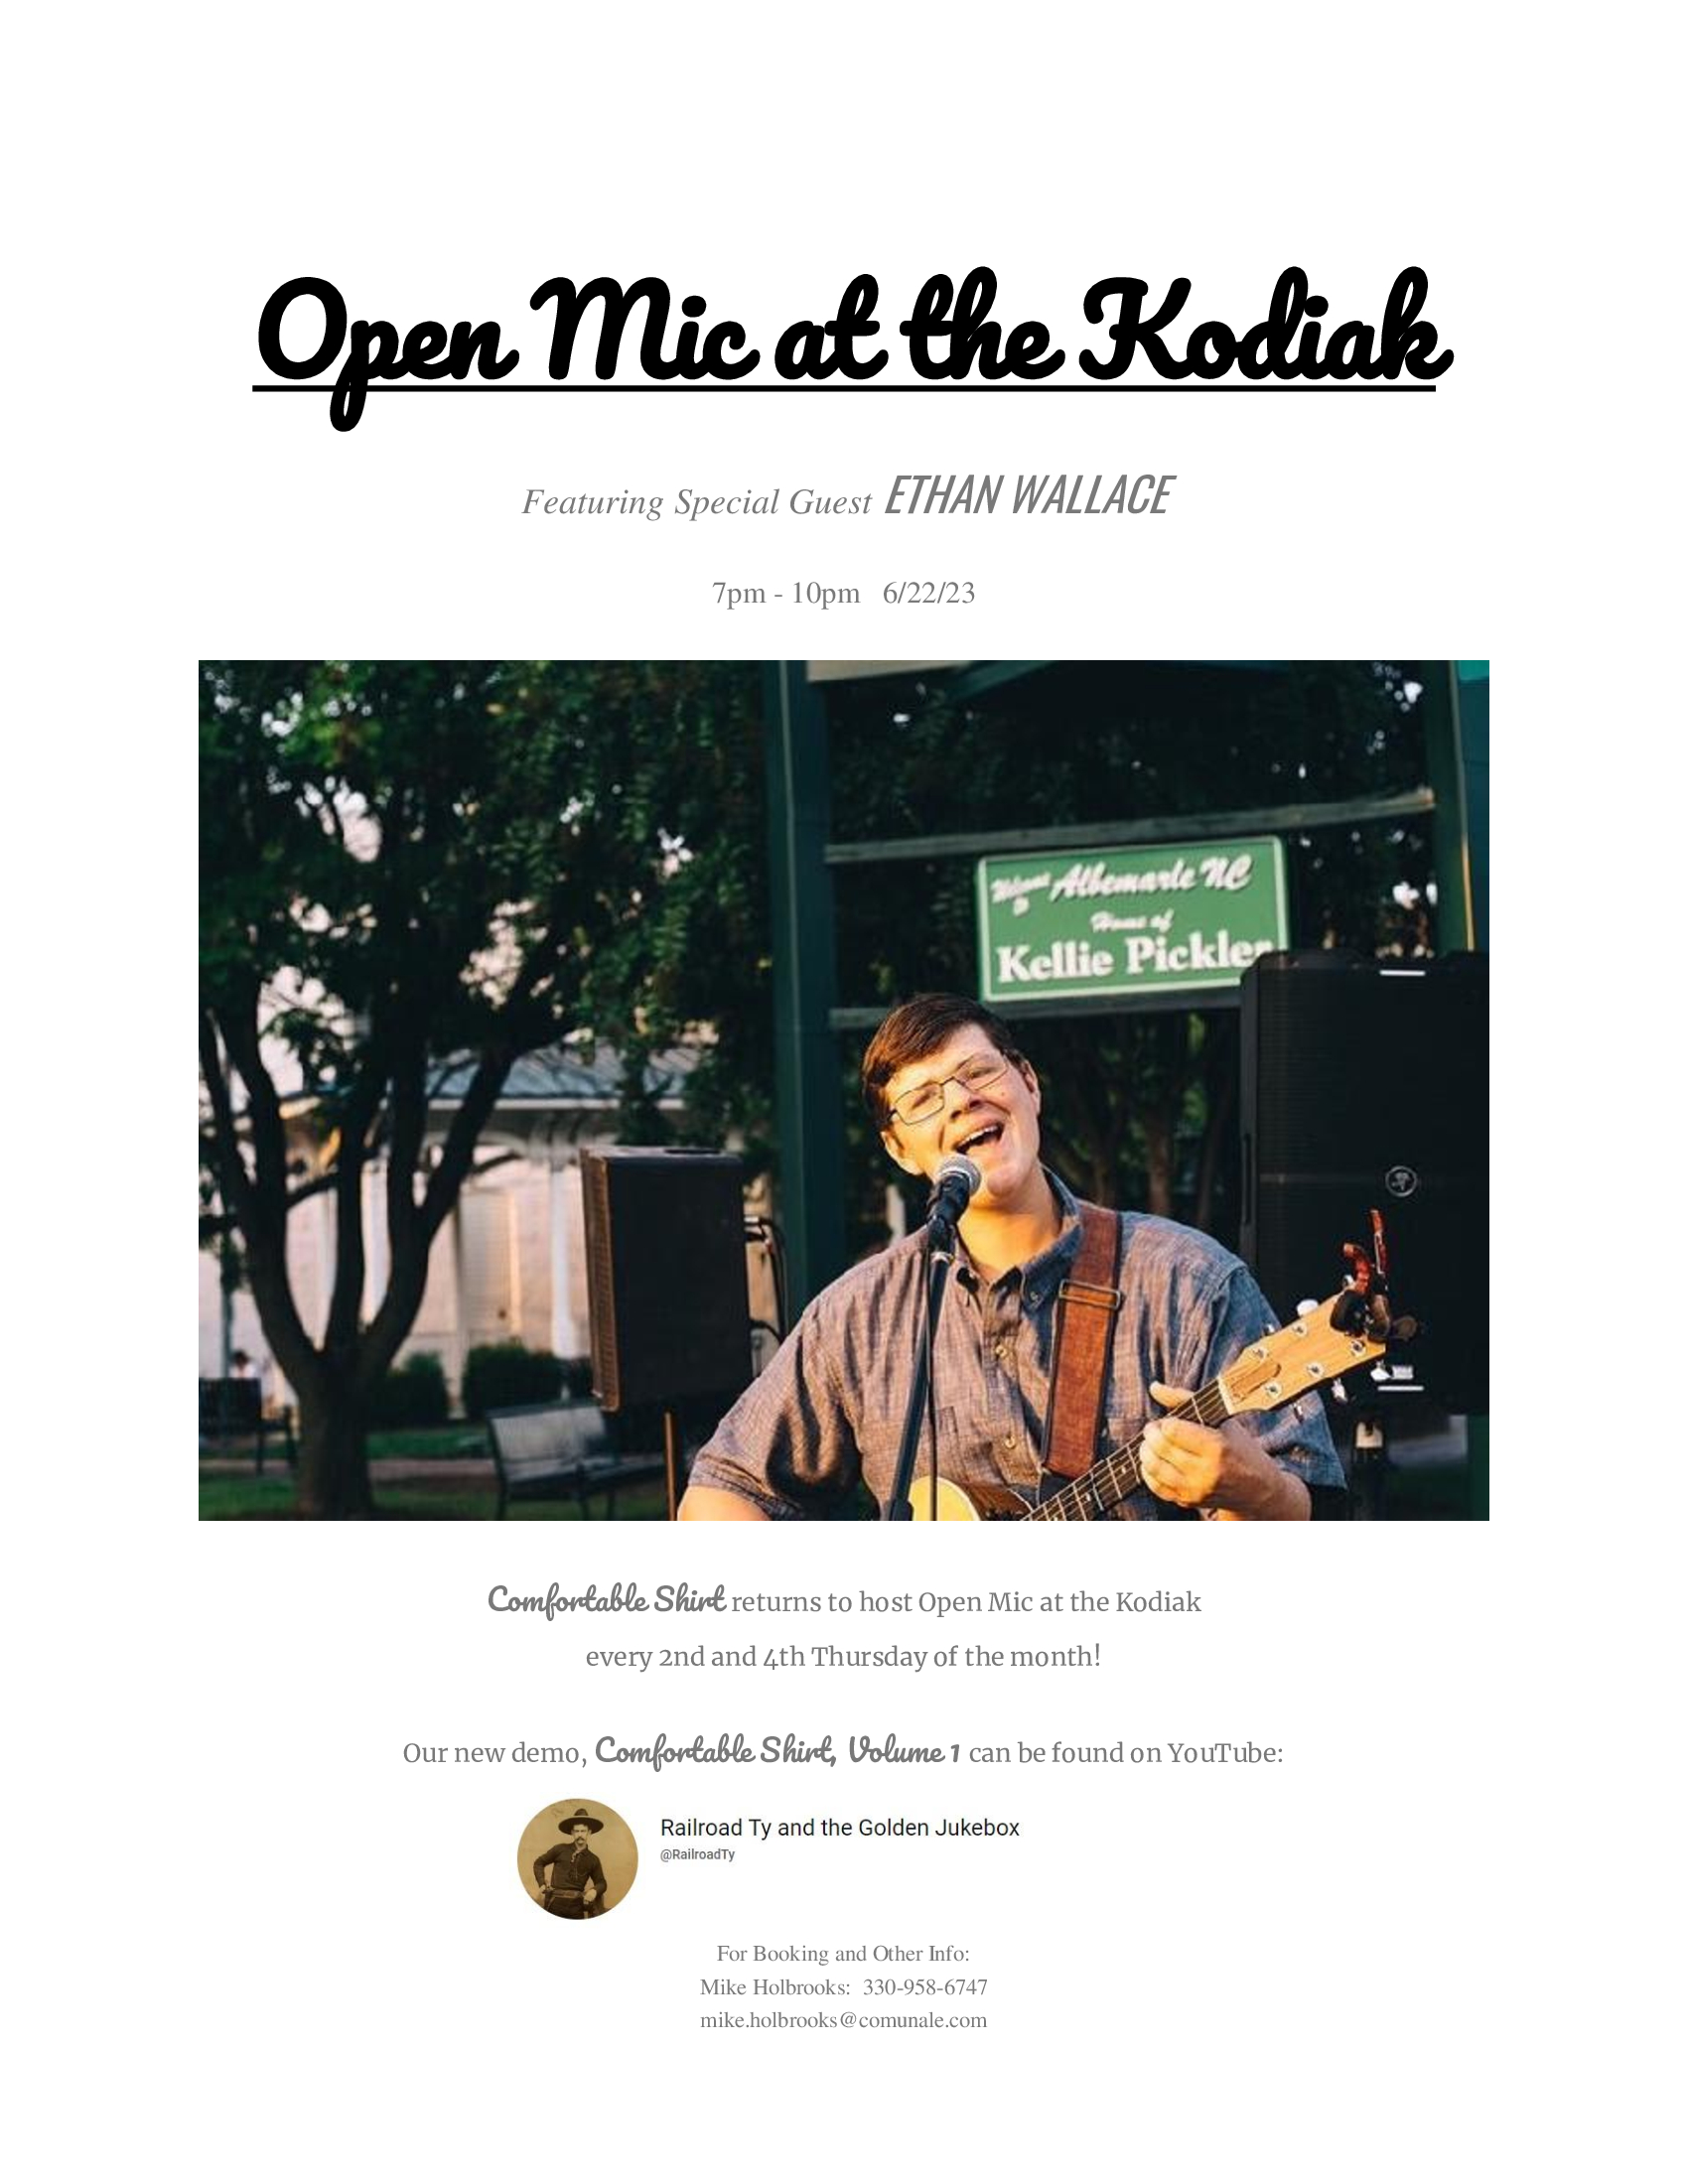 The Kodiak Cocktail Bar and Music Lounge